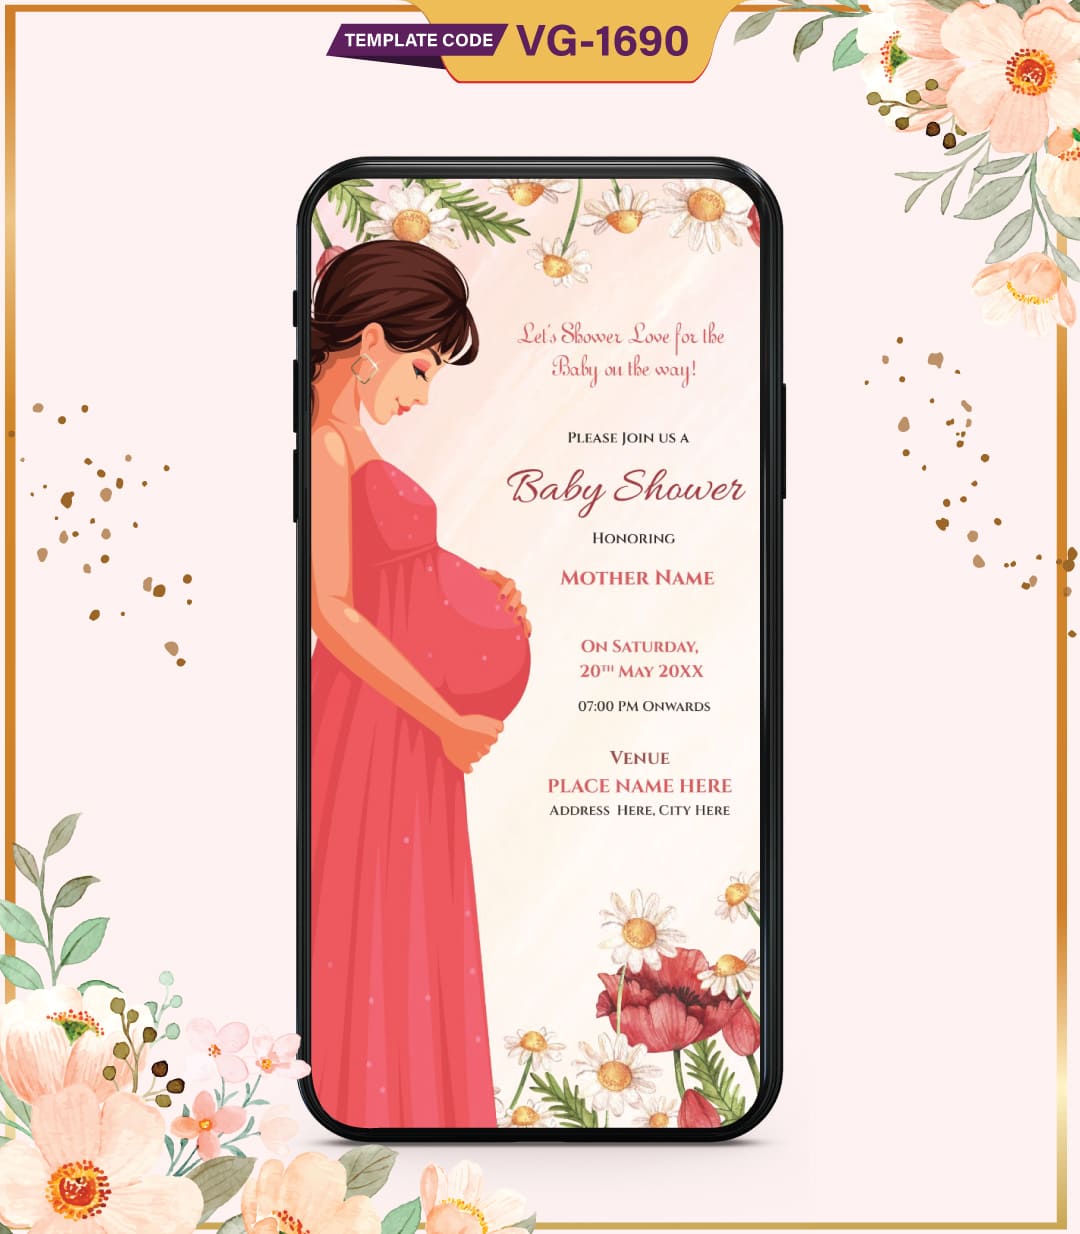 Digital Baby Shower Invitation Card